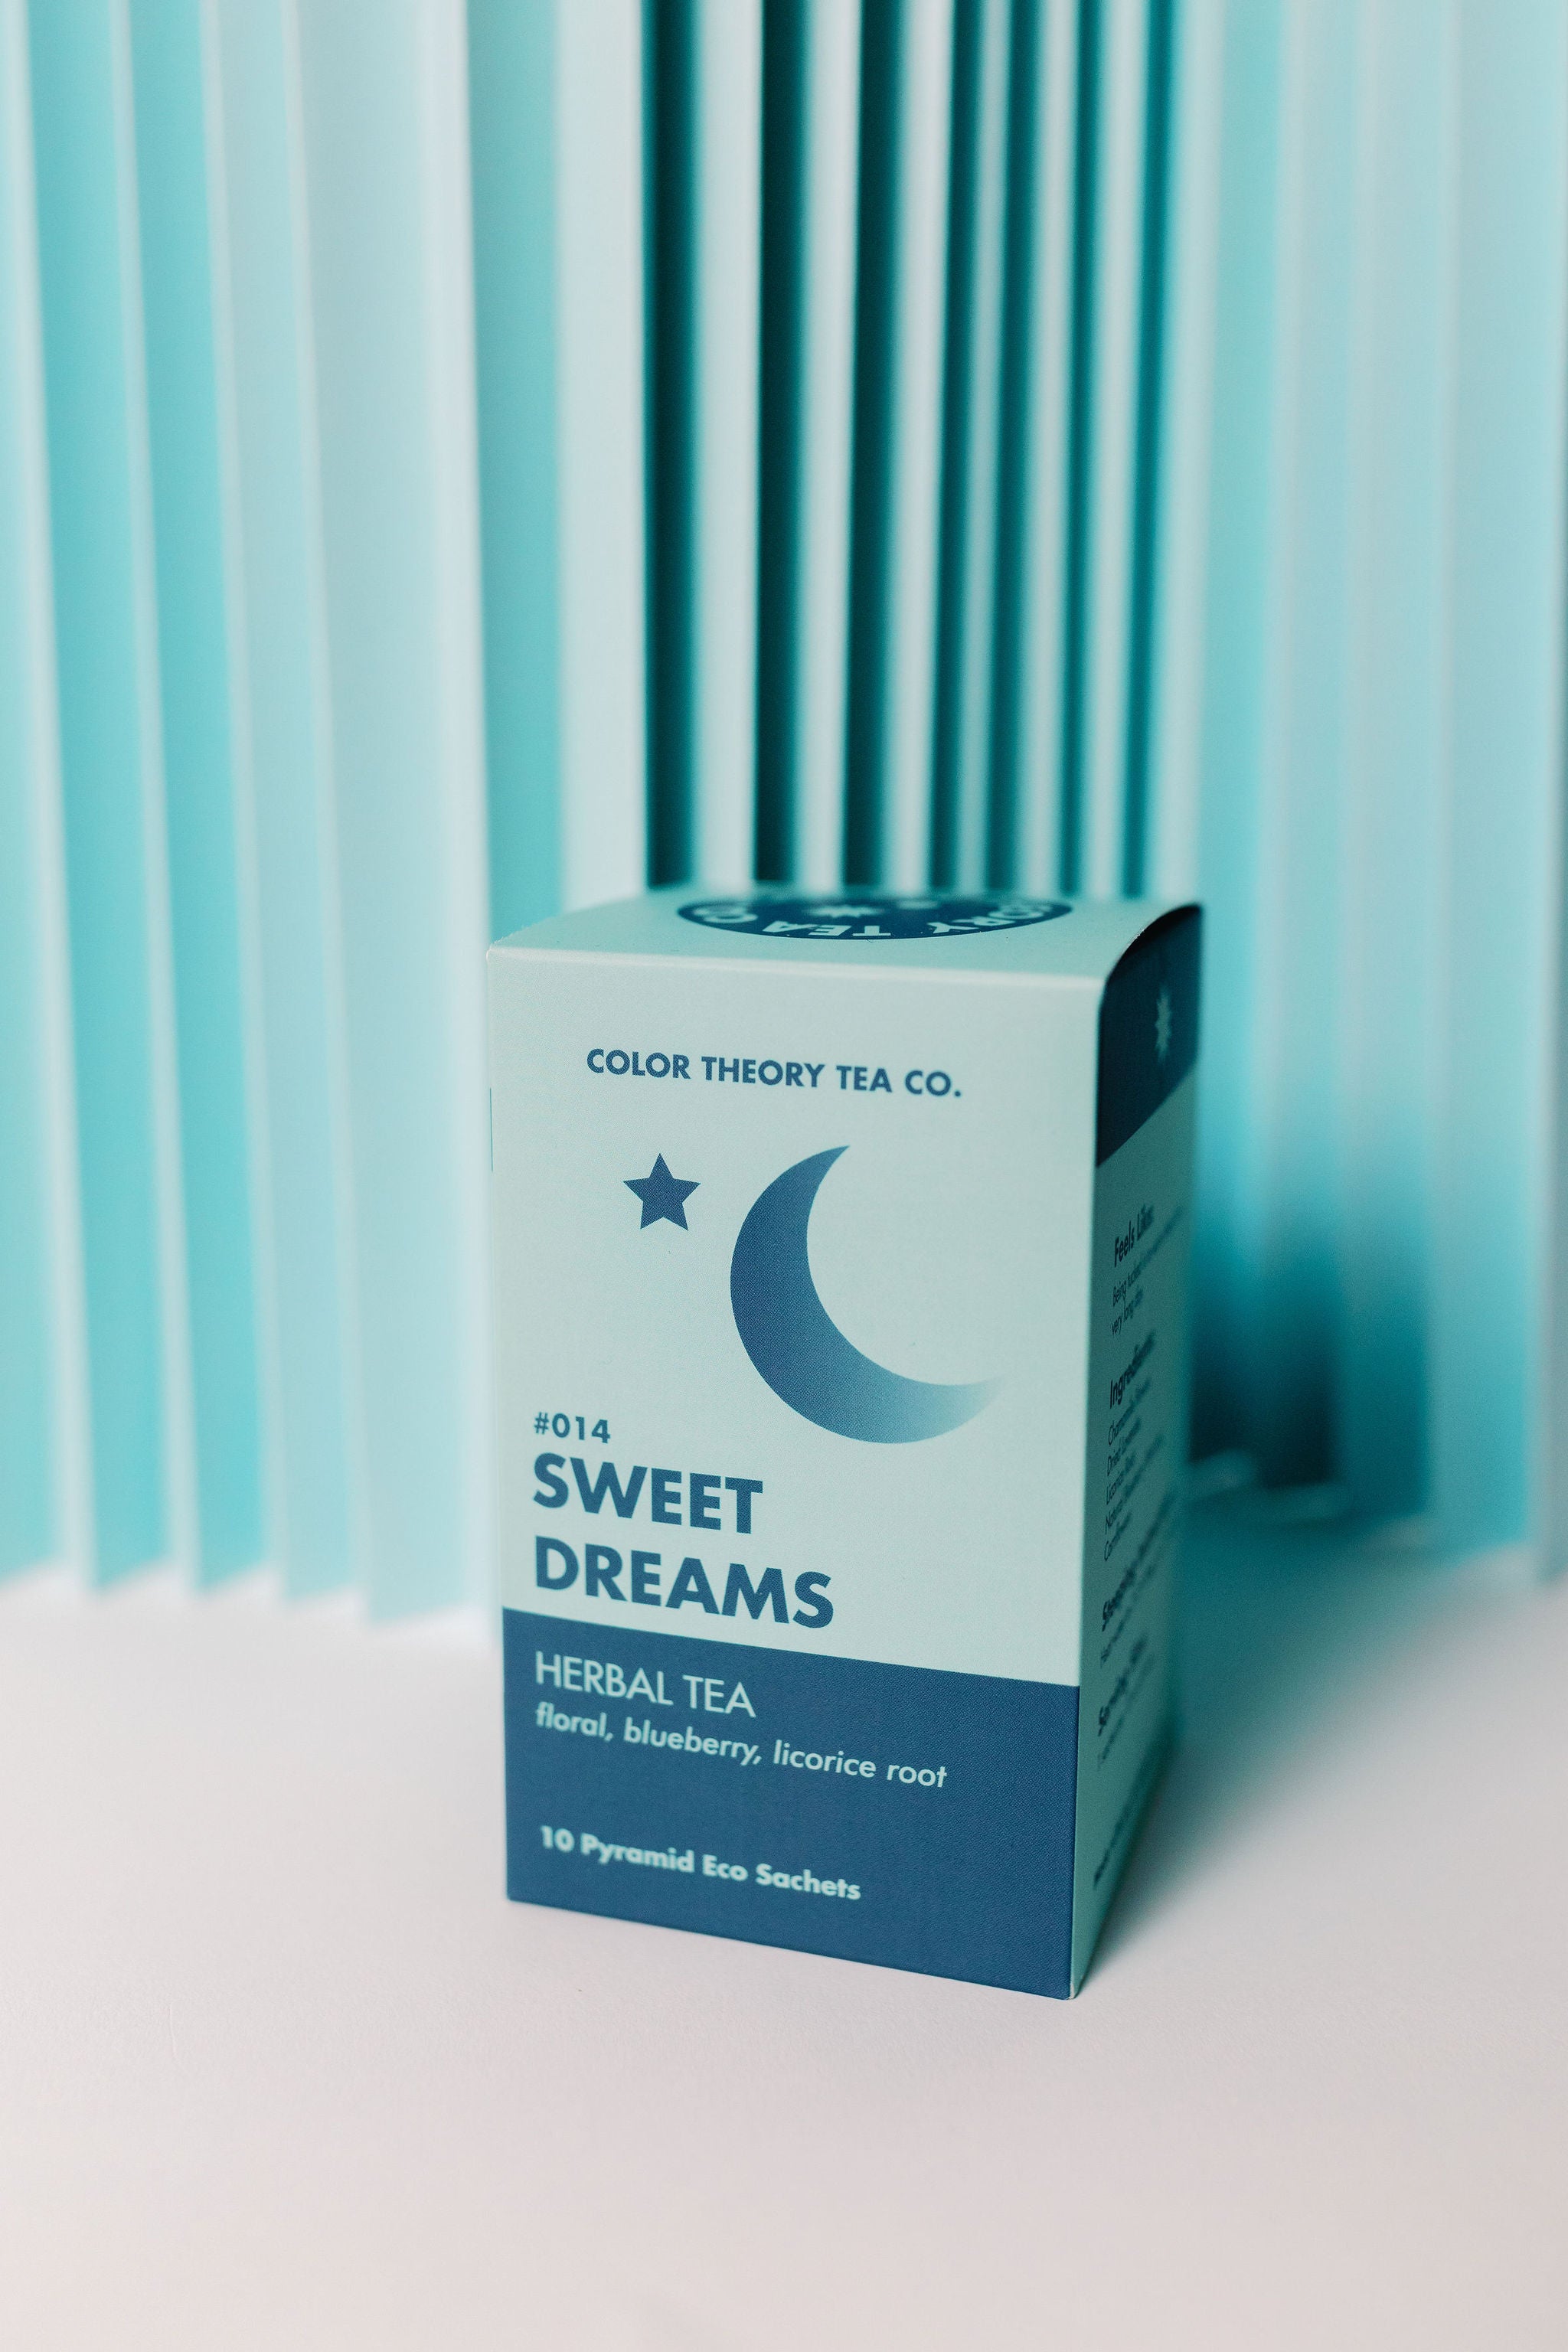 Sweet Dreams Sleep Tight Big Kisses Goodnight (Paperback)